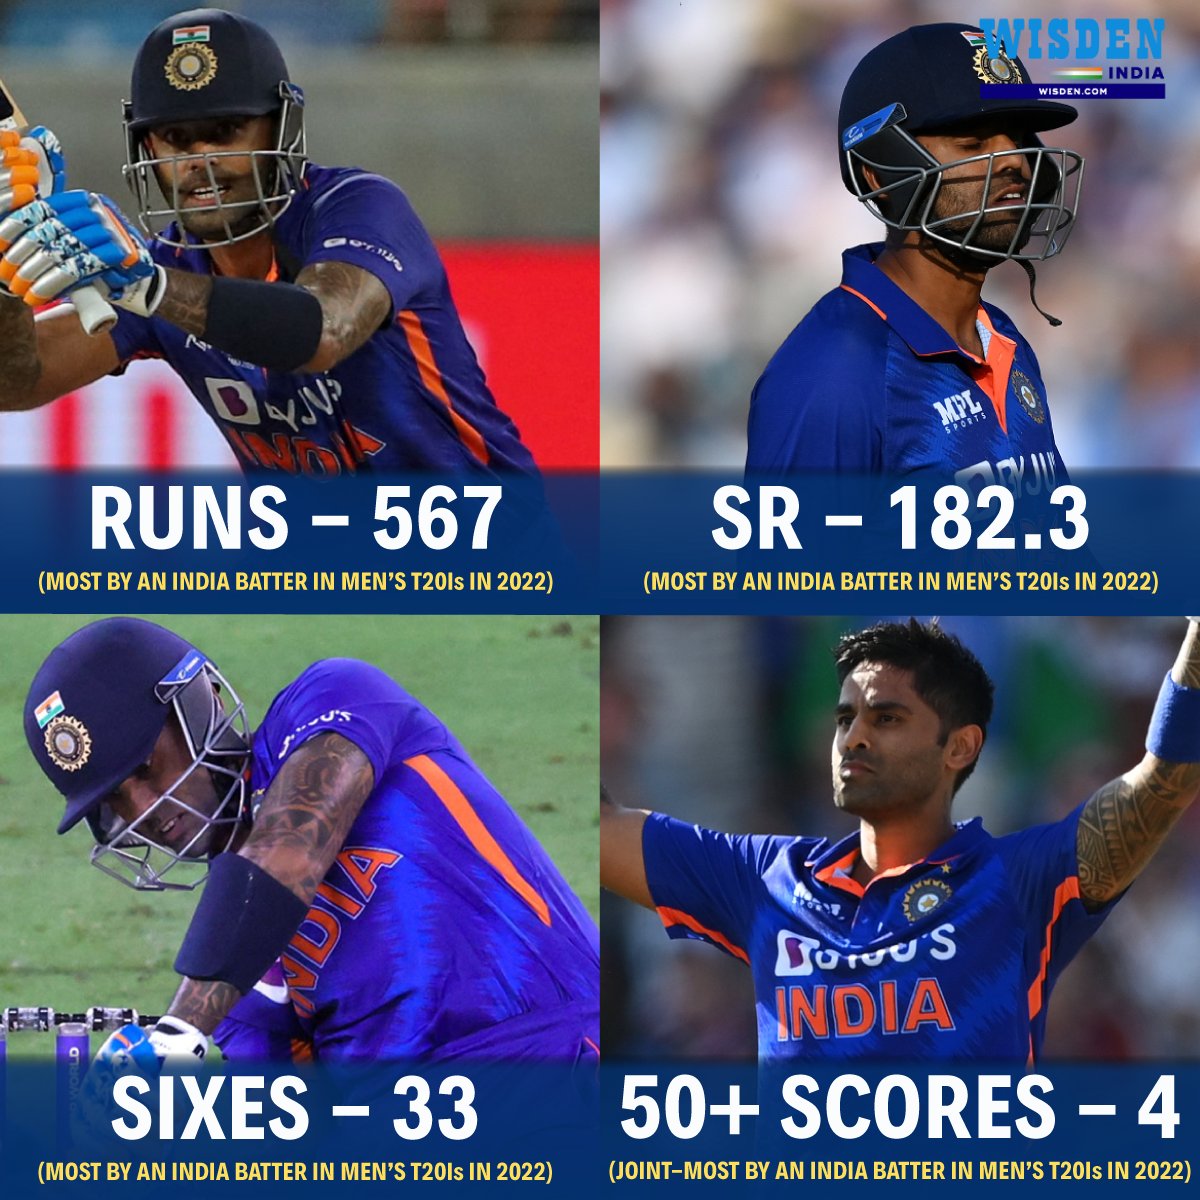 Suryakumar Yadav is dominating opponents in T20I cricket this year 💥🔥

#SuryakumarYadav #India #AsiaCup #INDvsHK